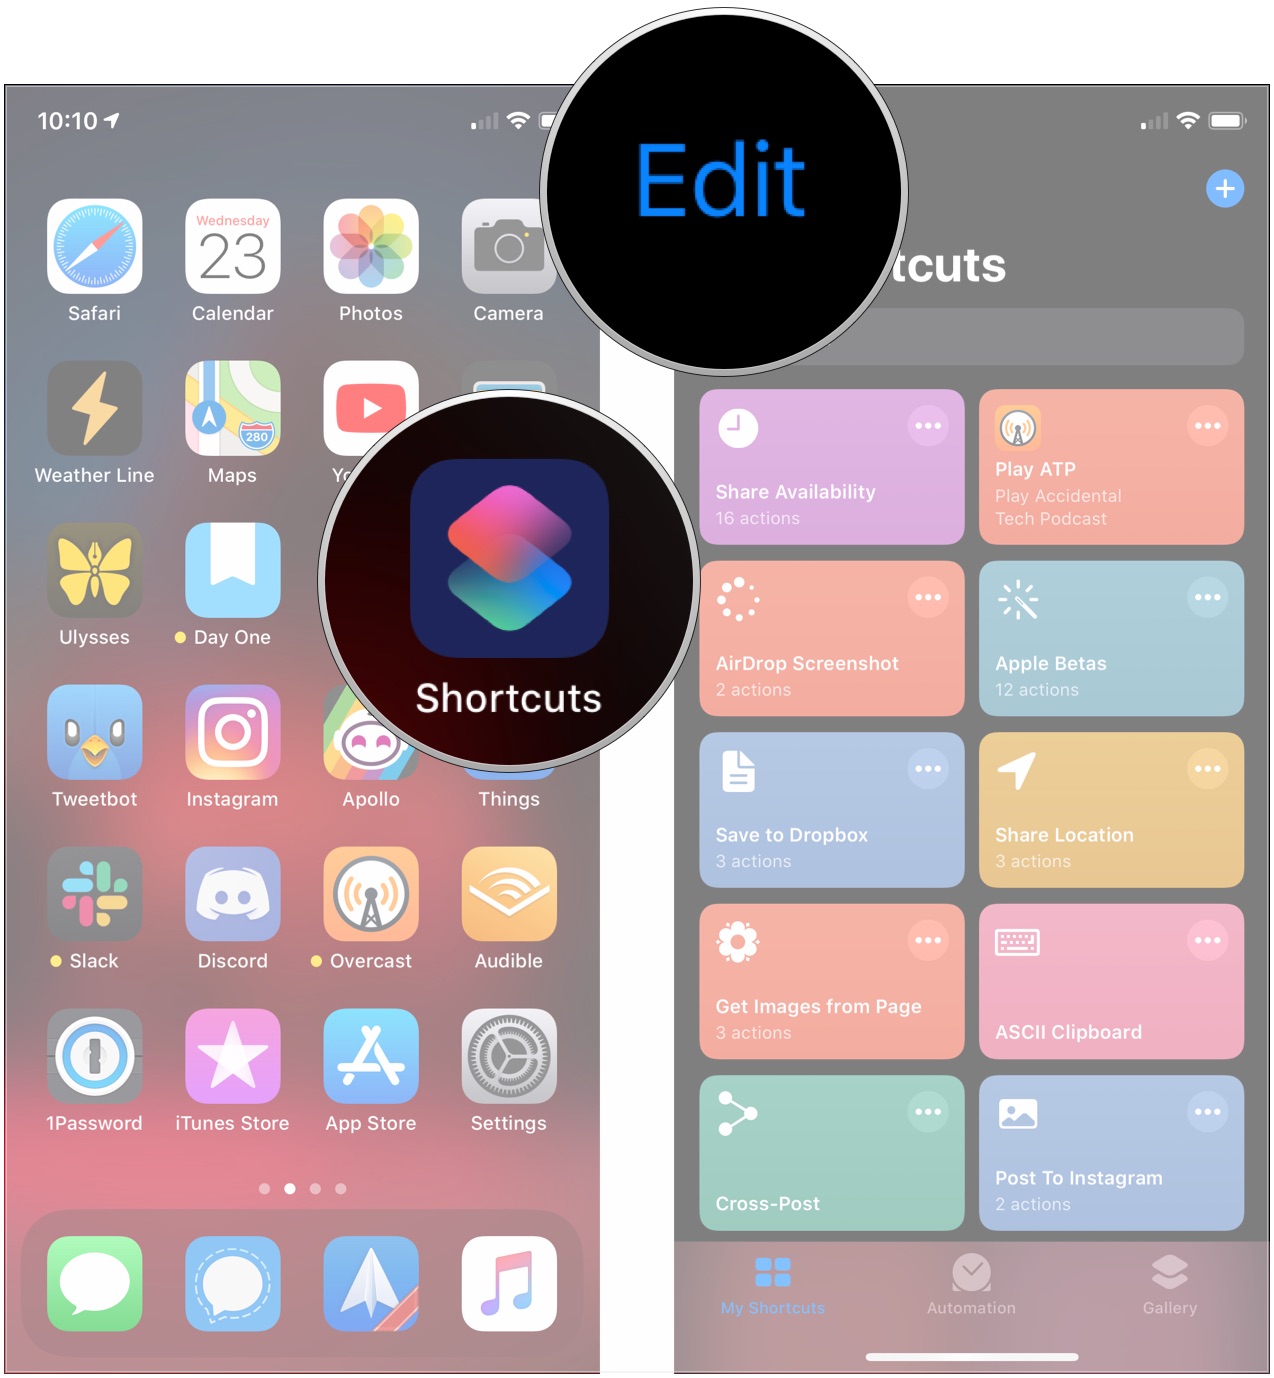 Open Shortcuts, tap Edit